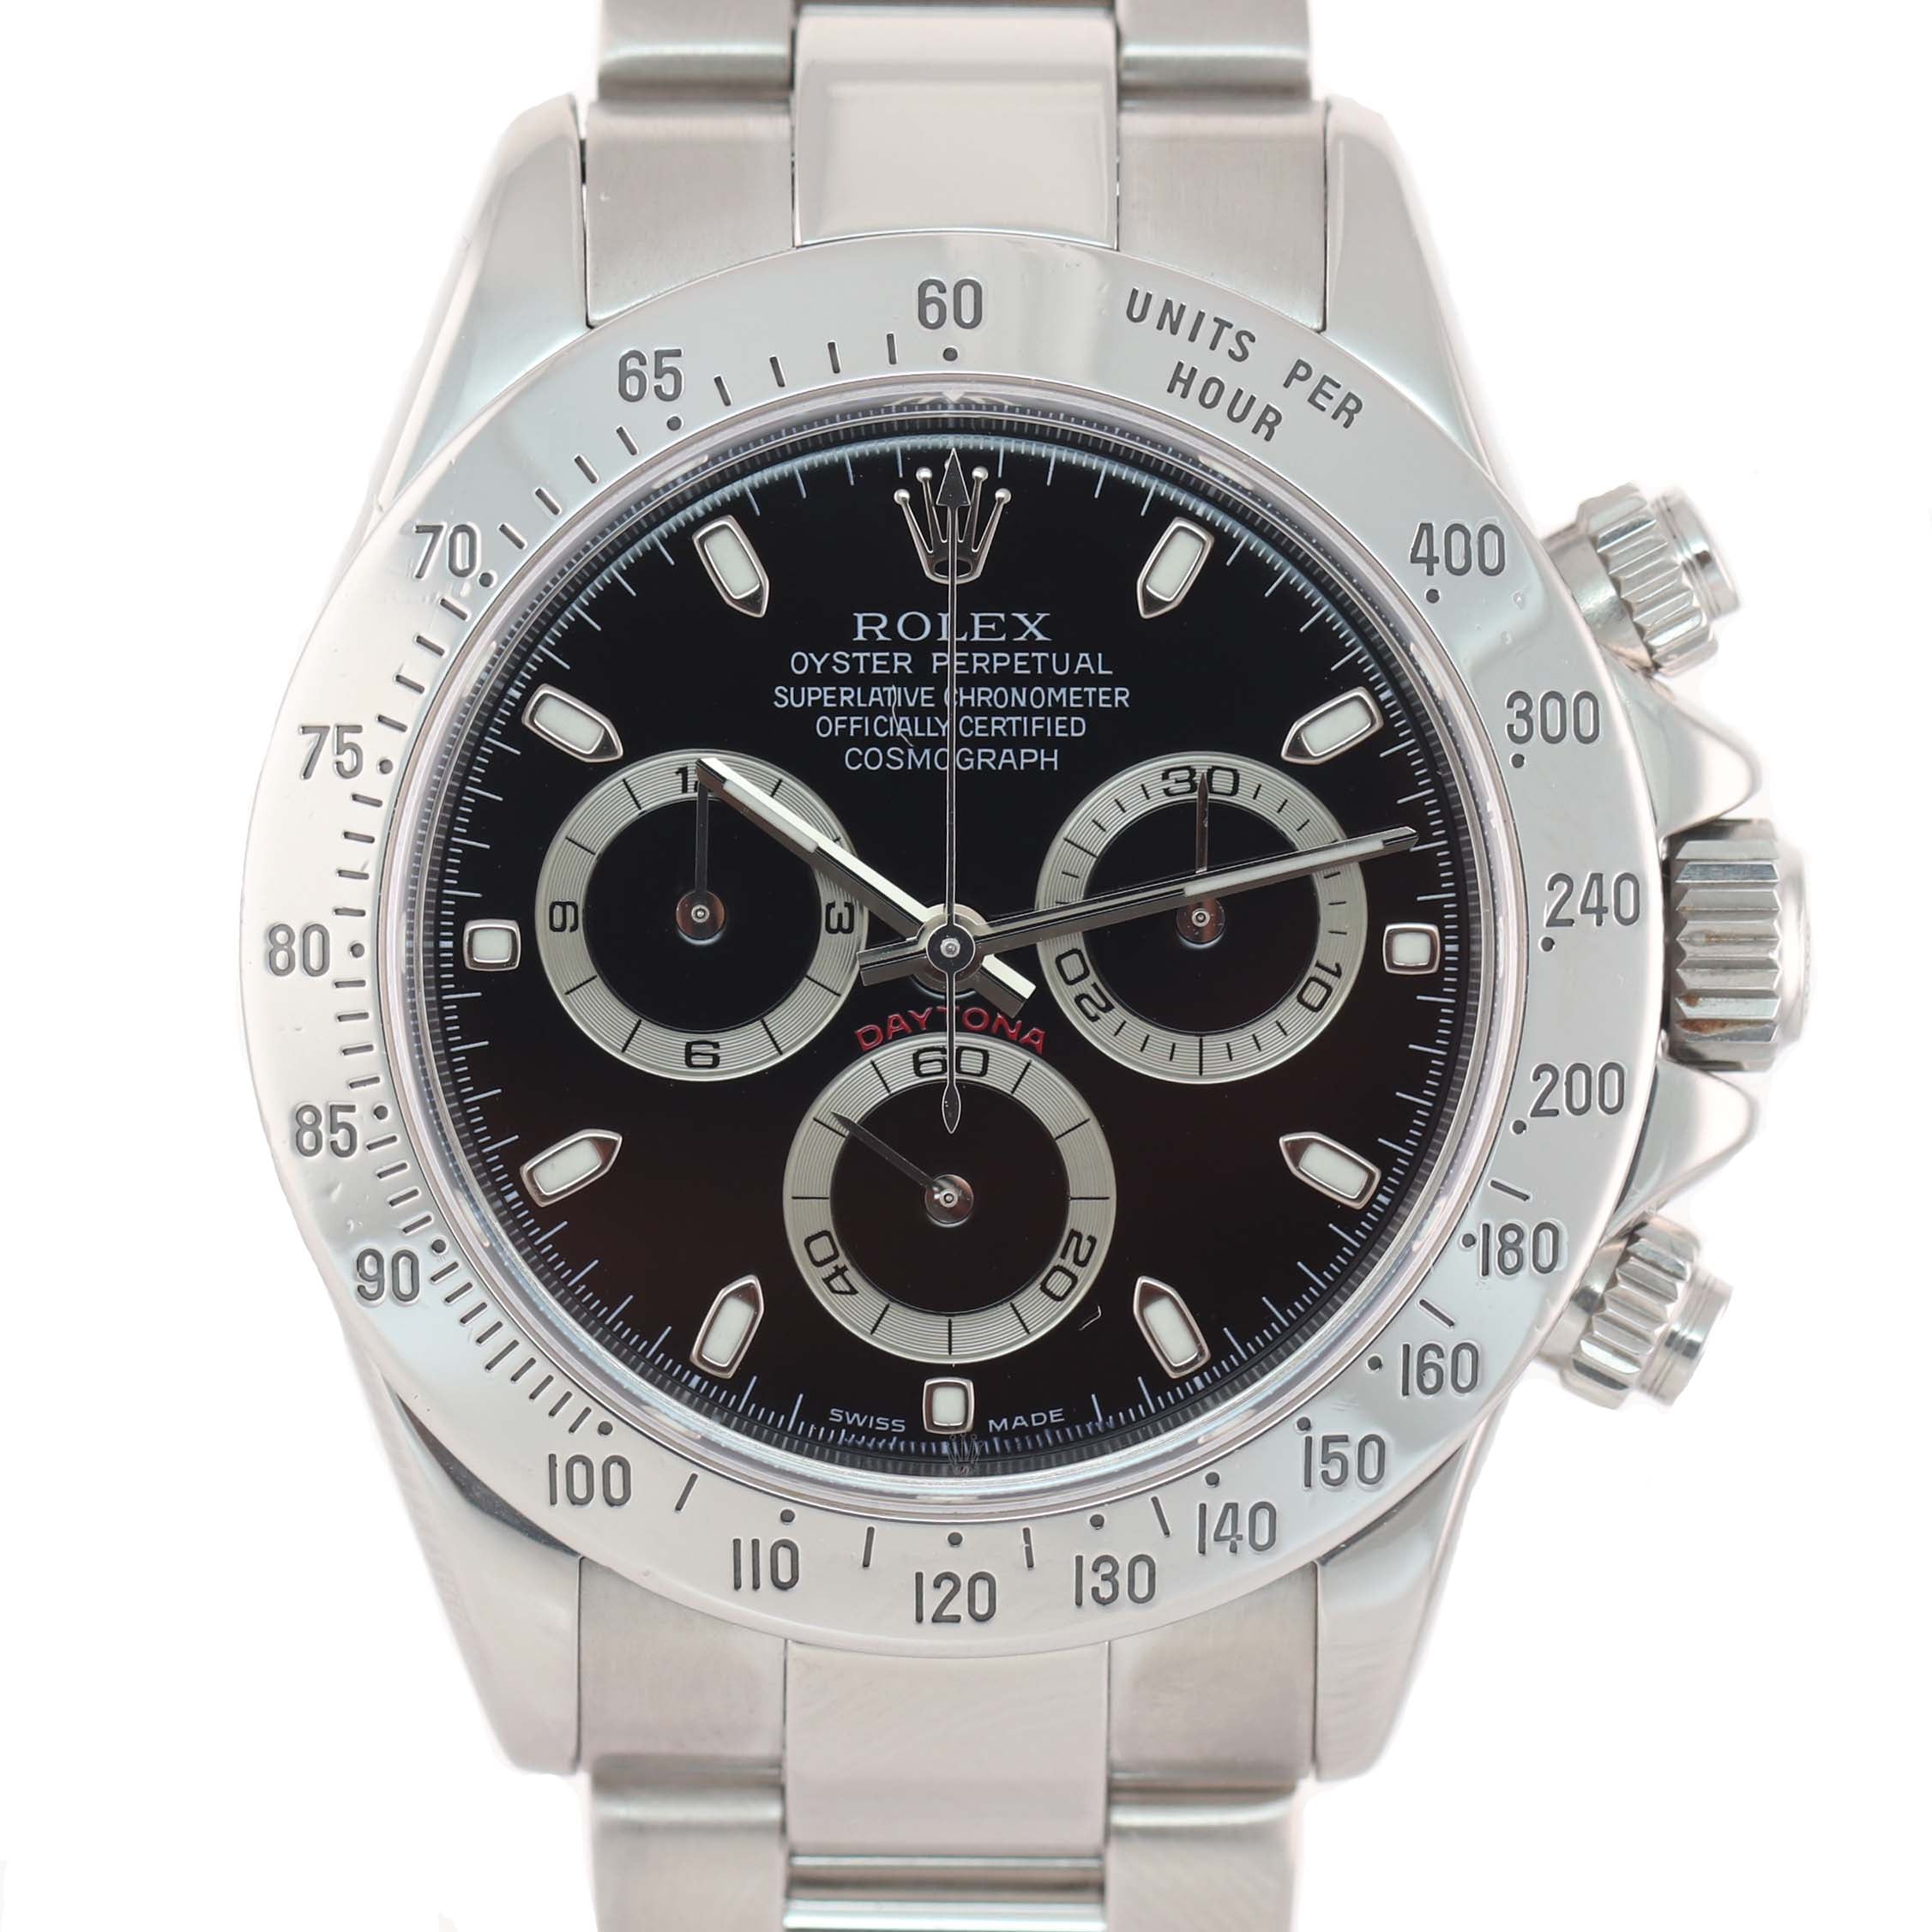 2005 MINT Rolex Daytona 116520 Black Dial Steel Chronograph 40mm Watch Box